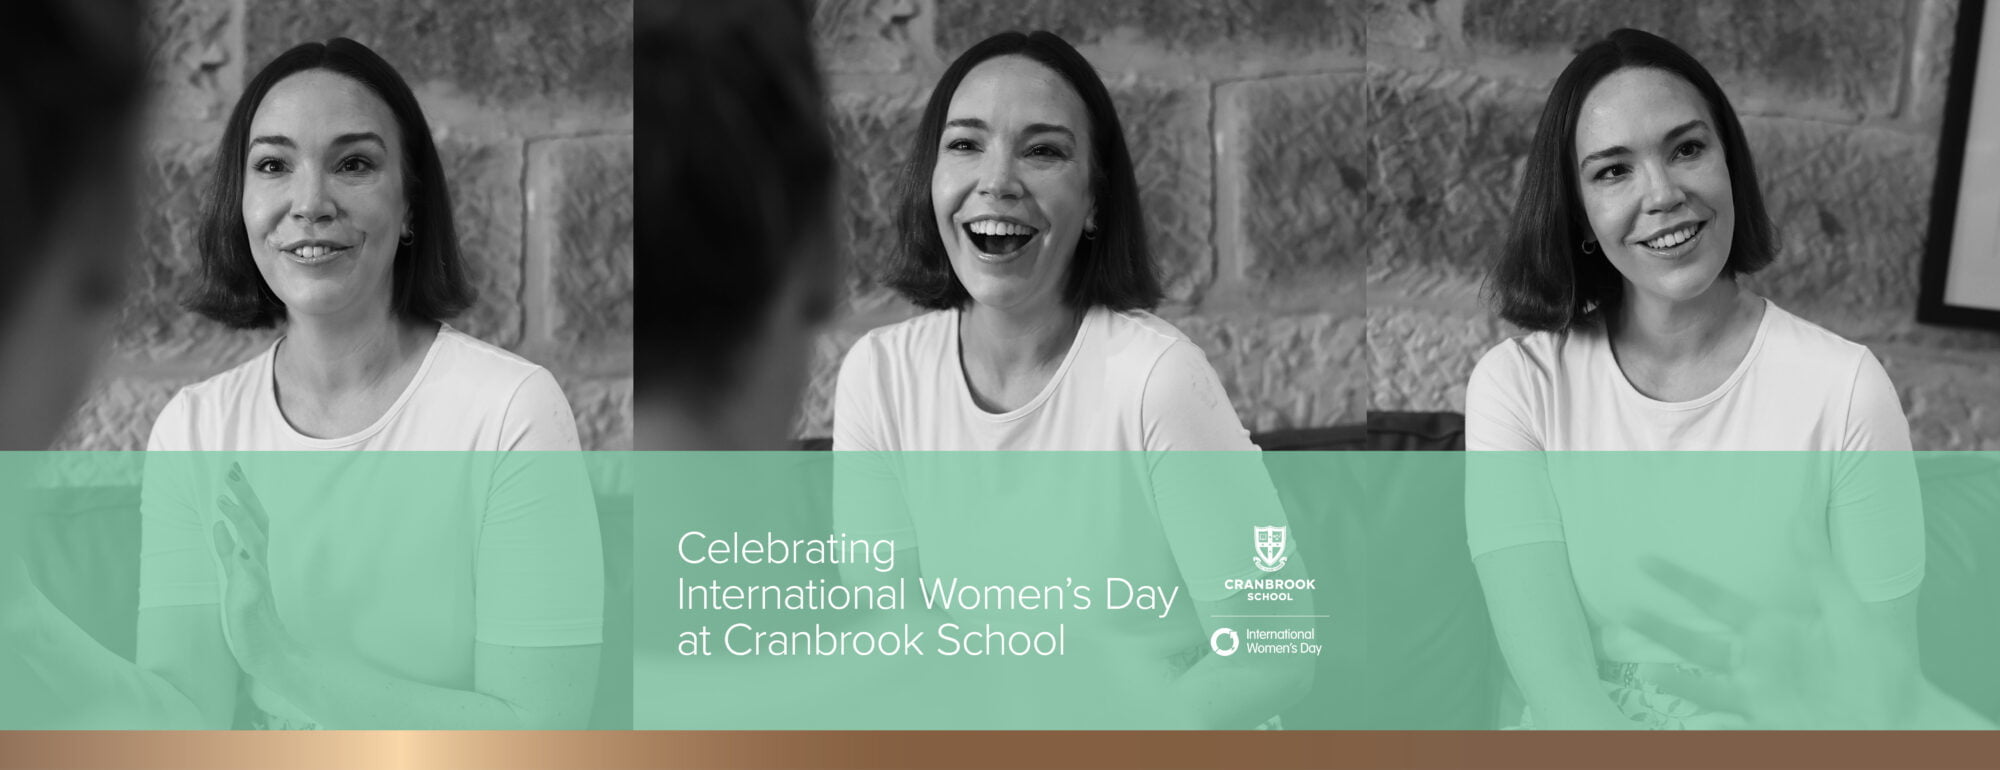 Celebrating International Women’s Day at Cranbrook School: Sophie Boniface